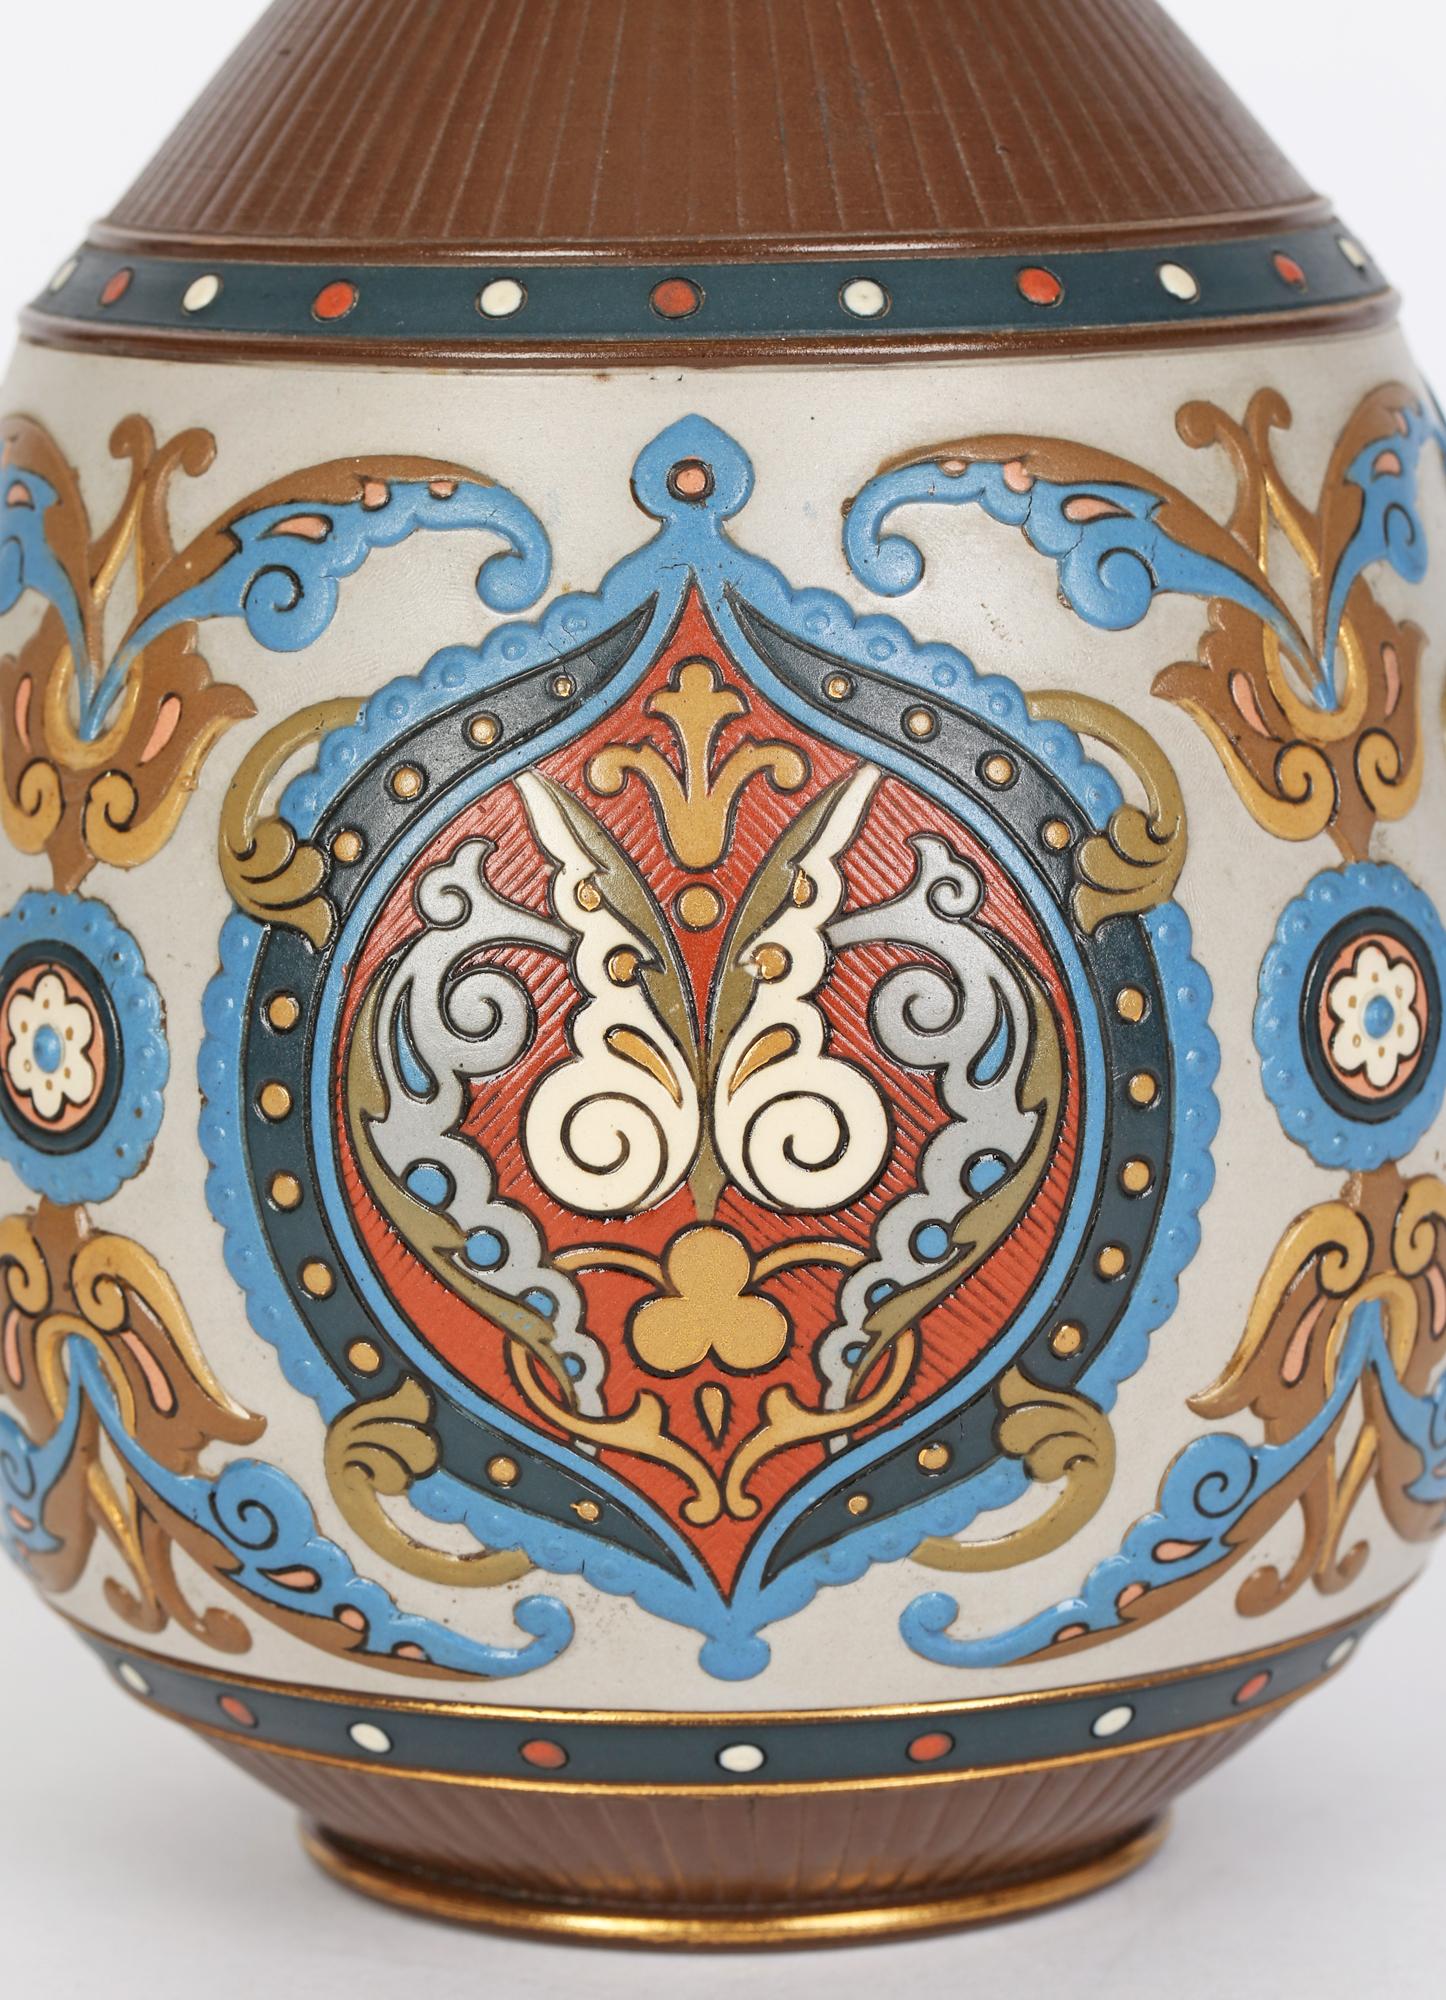 Ceramic Villeroy & Boch Mettlach Enameled Islamic Design Art Pottery Vase